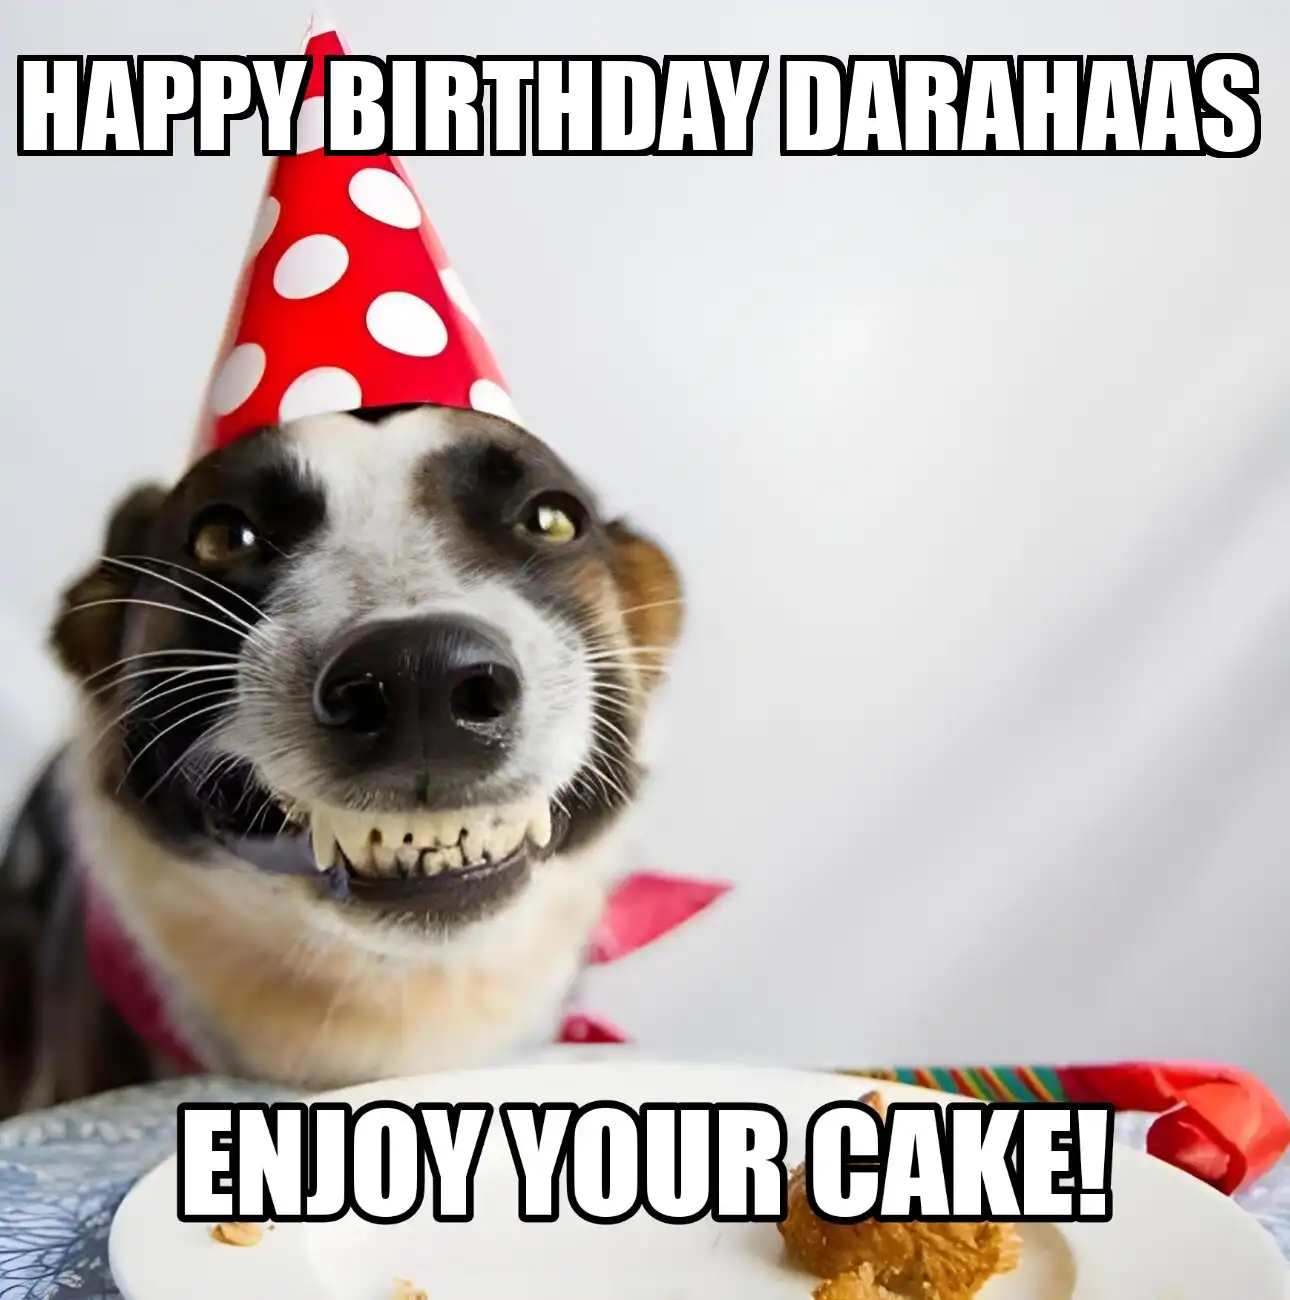 Happy Birthday Darahaas Enjoy Your Cake Dog Meme